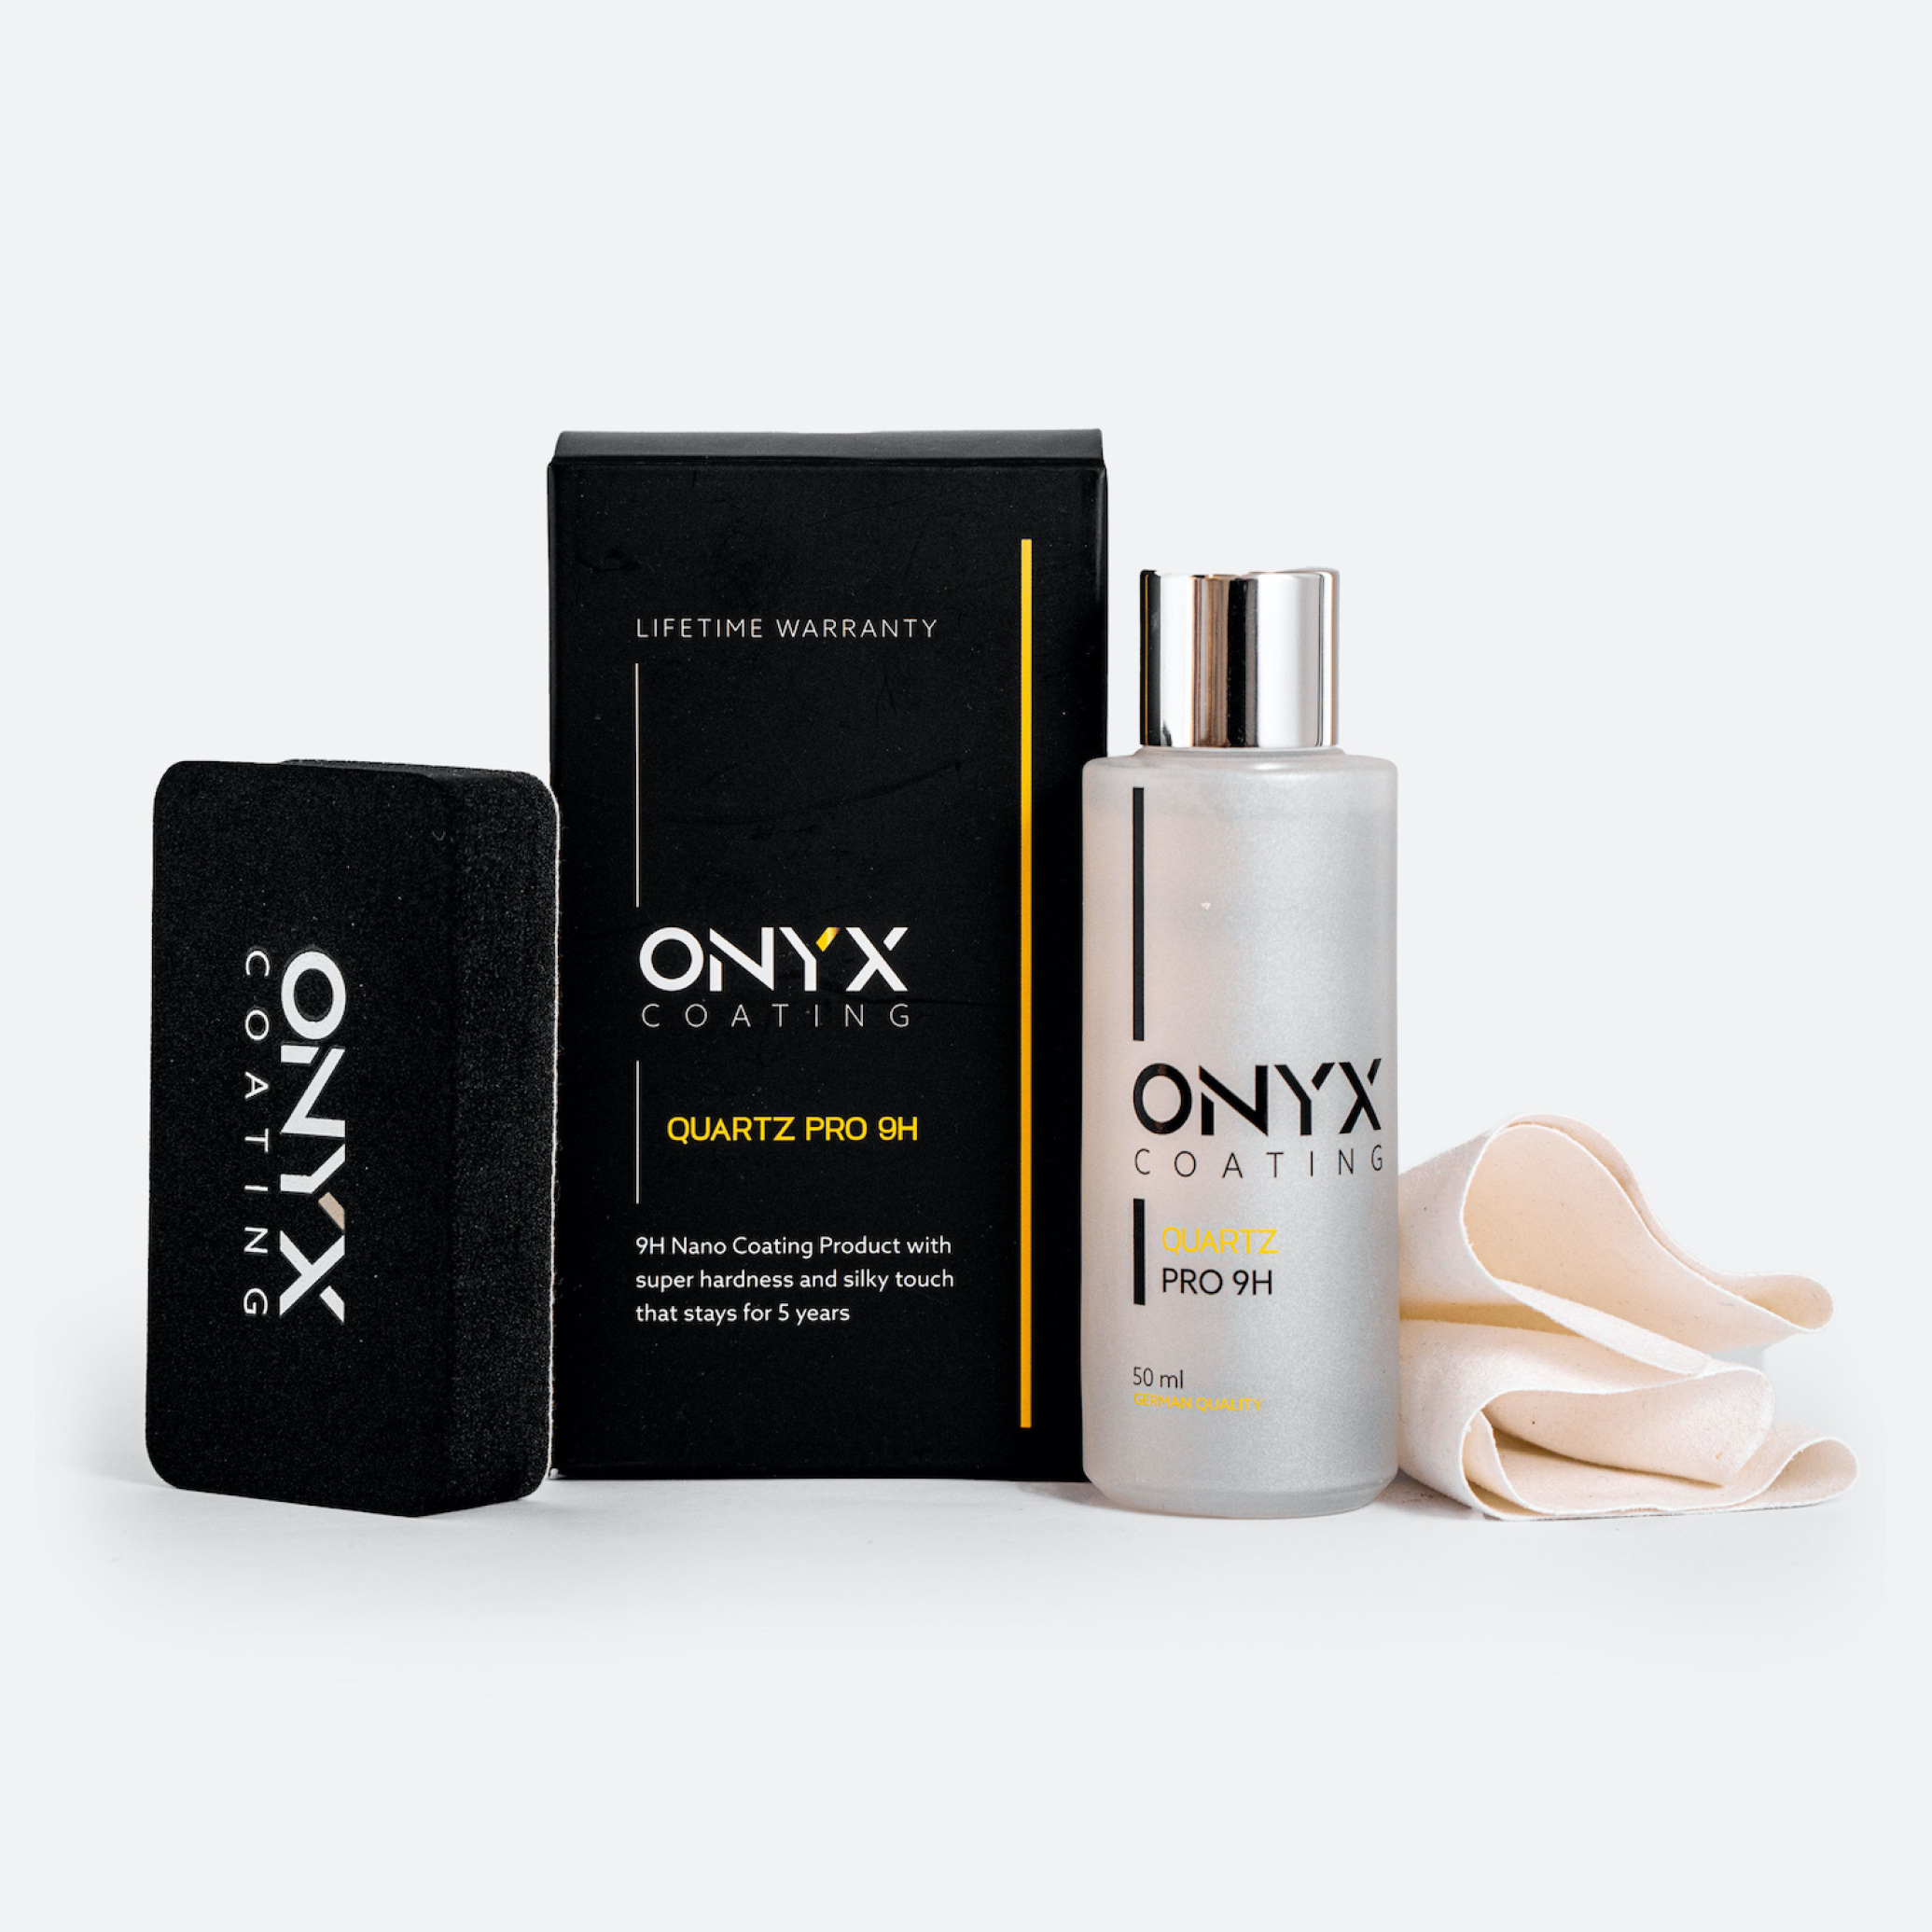  Onyx Coating Quartz Pro 9H 